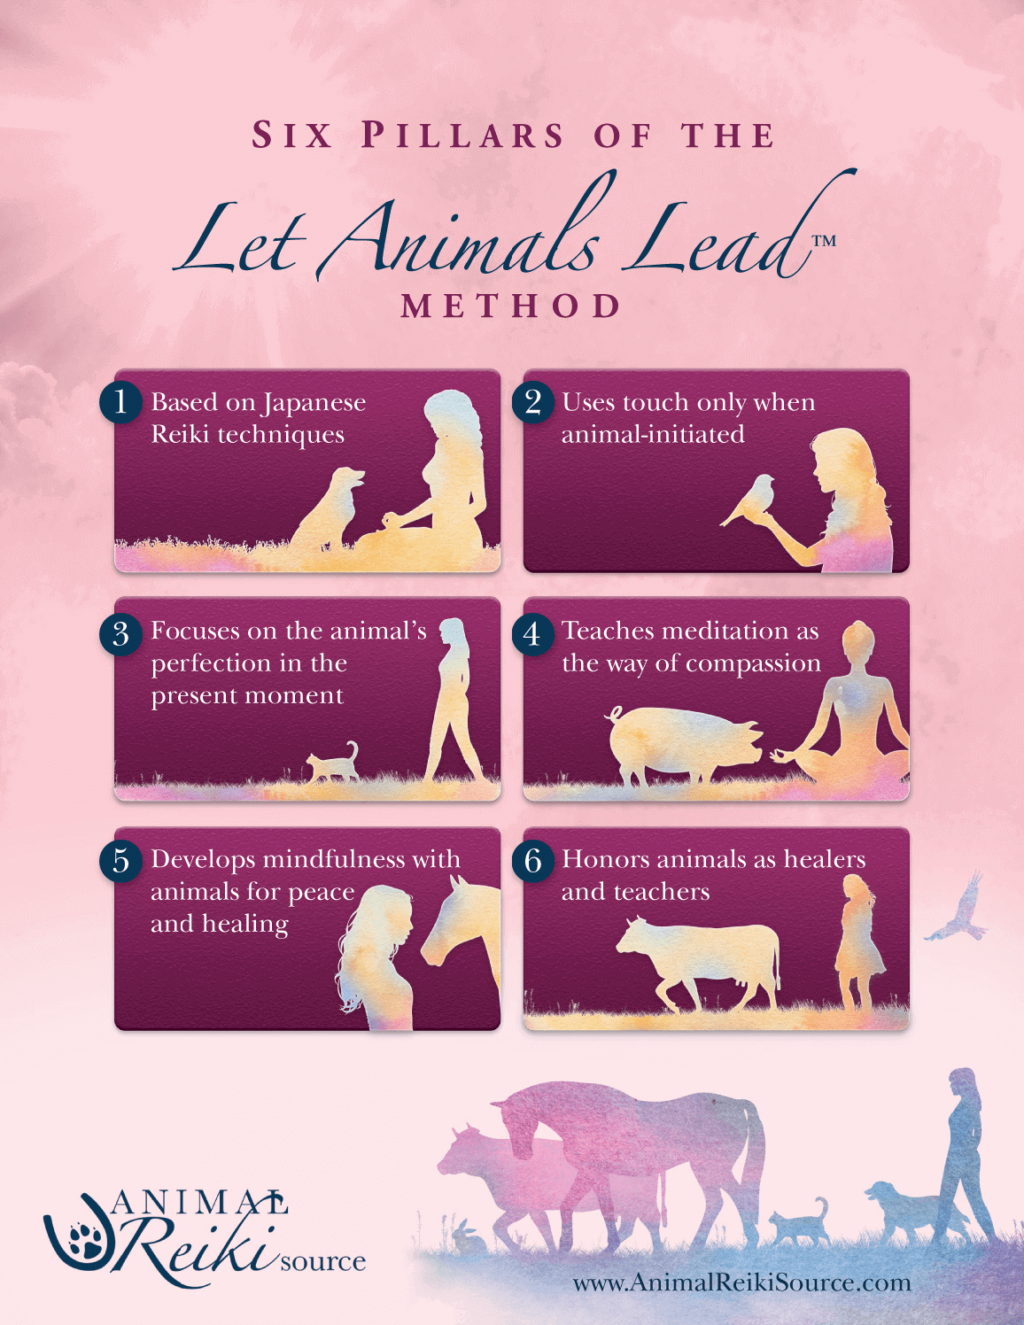 Six pillars of the Let Animals Lead Method